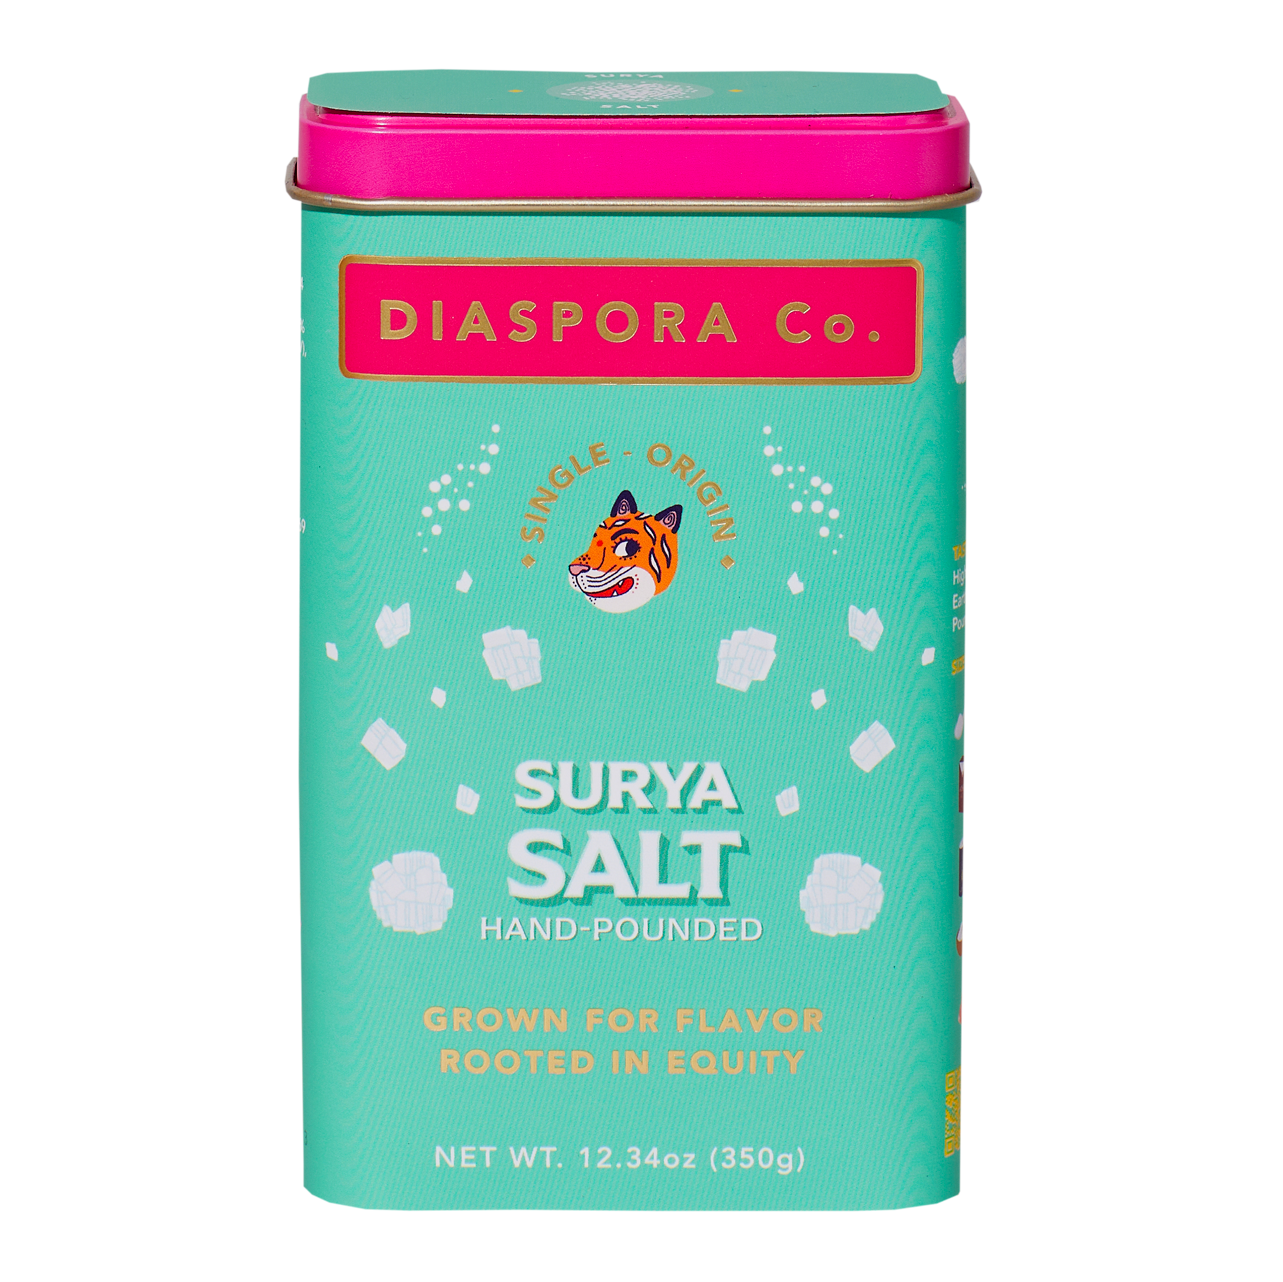 Diaspora Co. Surya Salt - 90g Tin